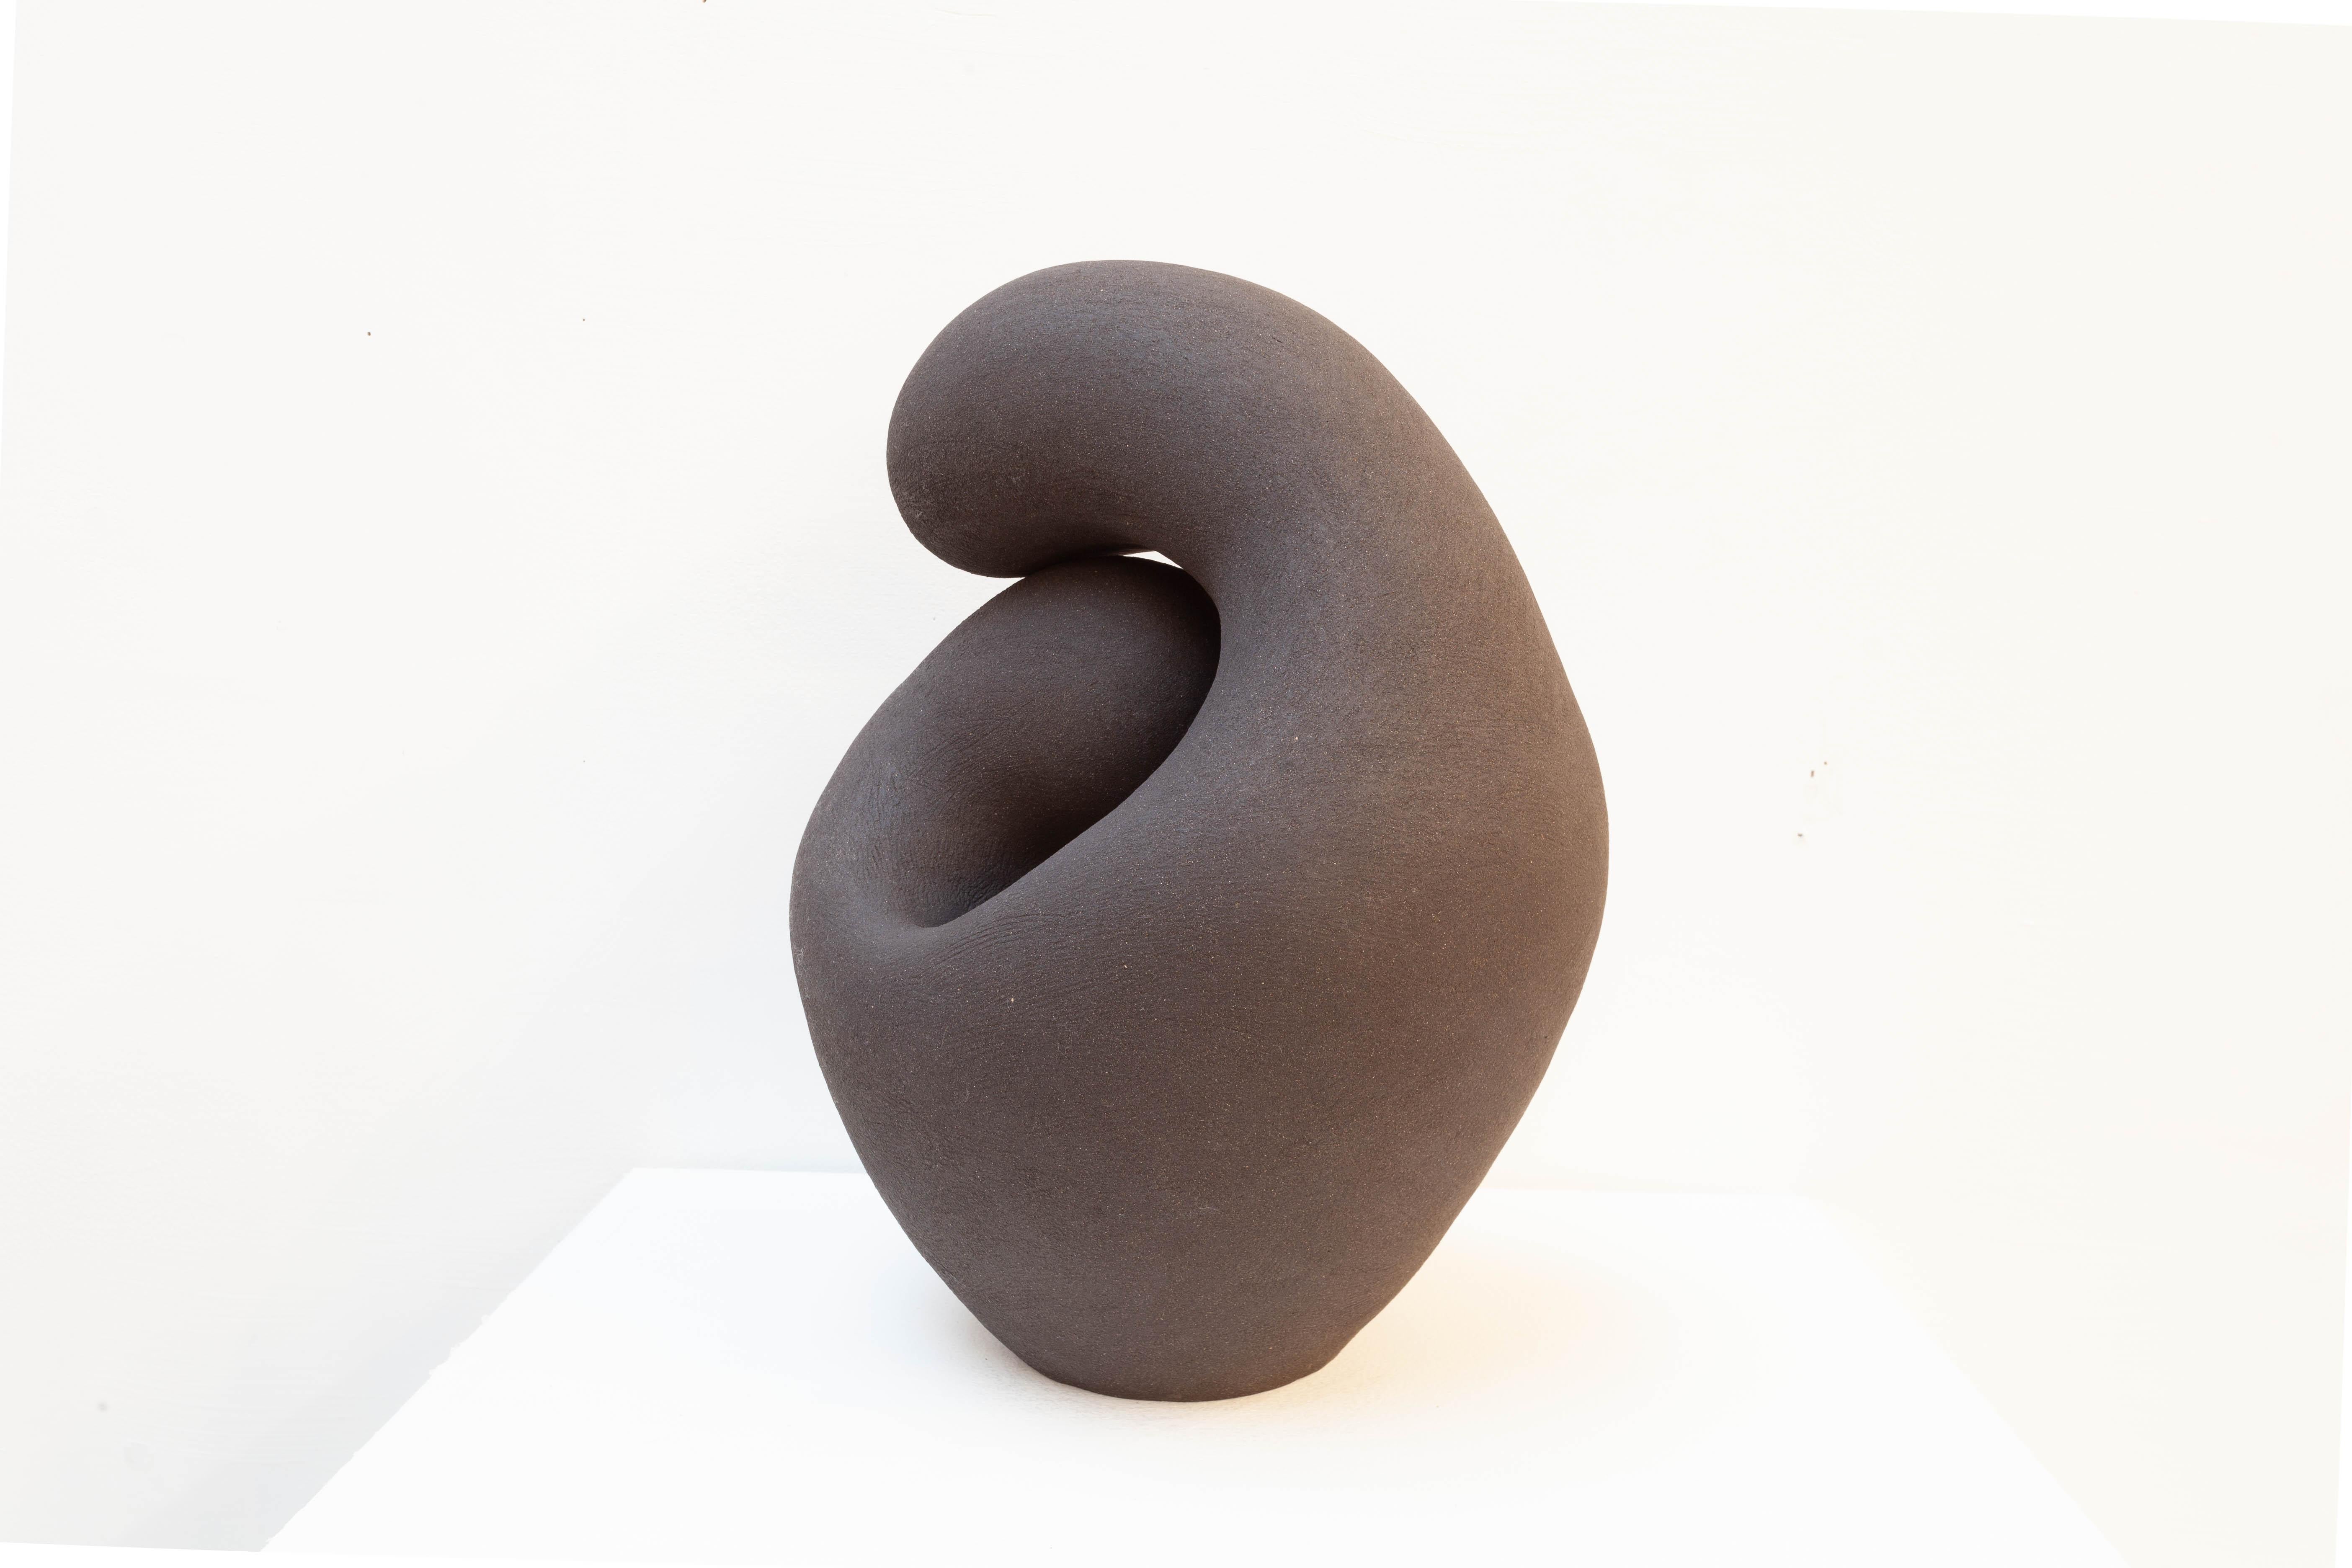 Cuddle - Sculpture by Alison McGechie